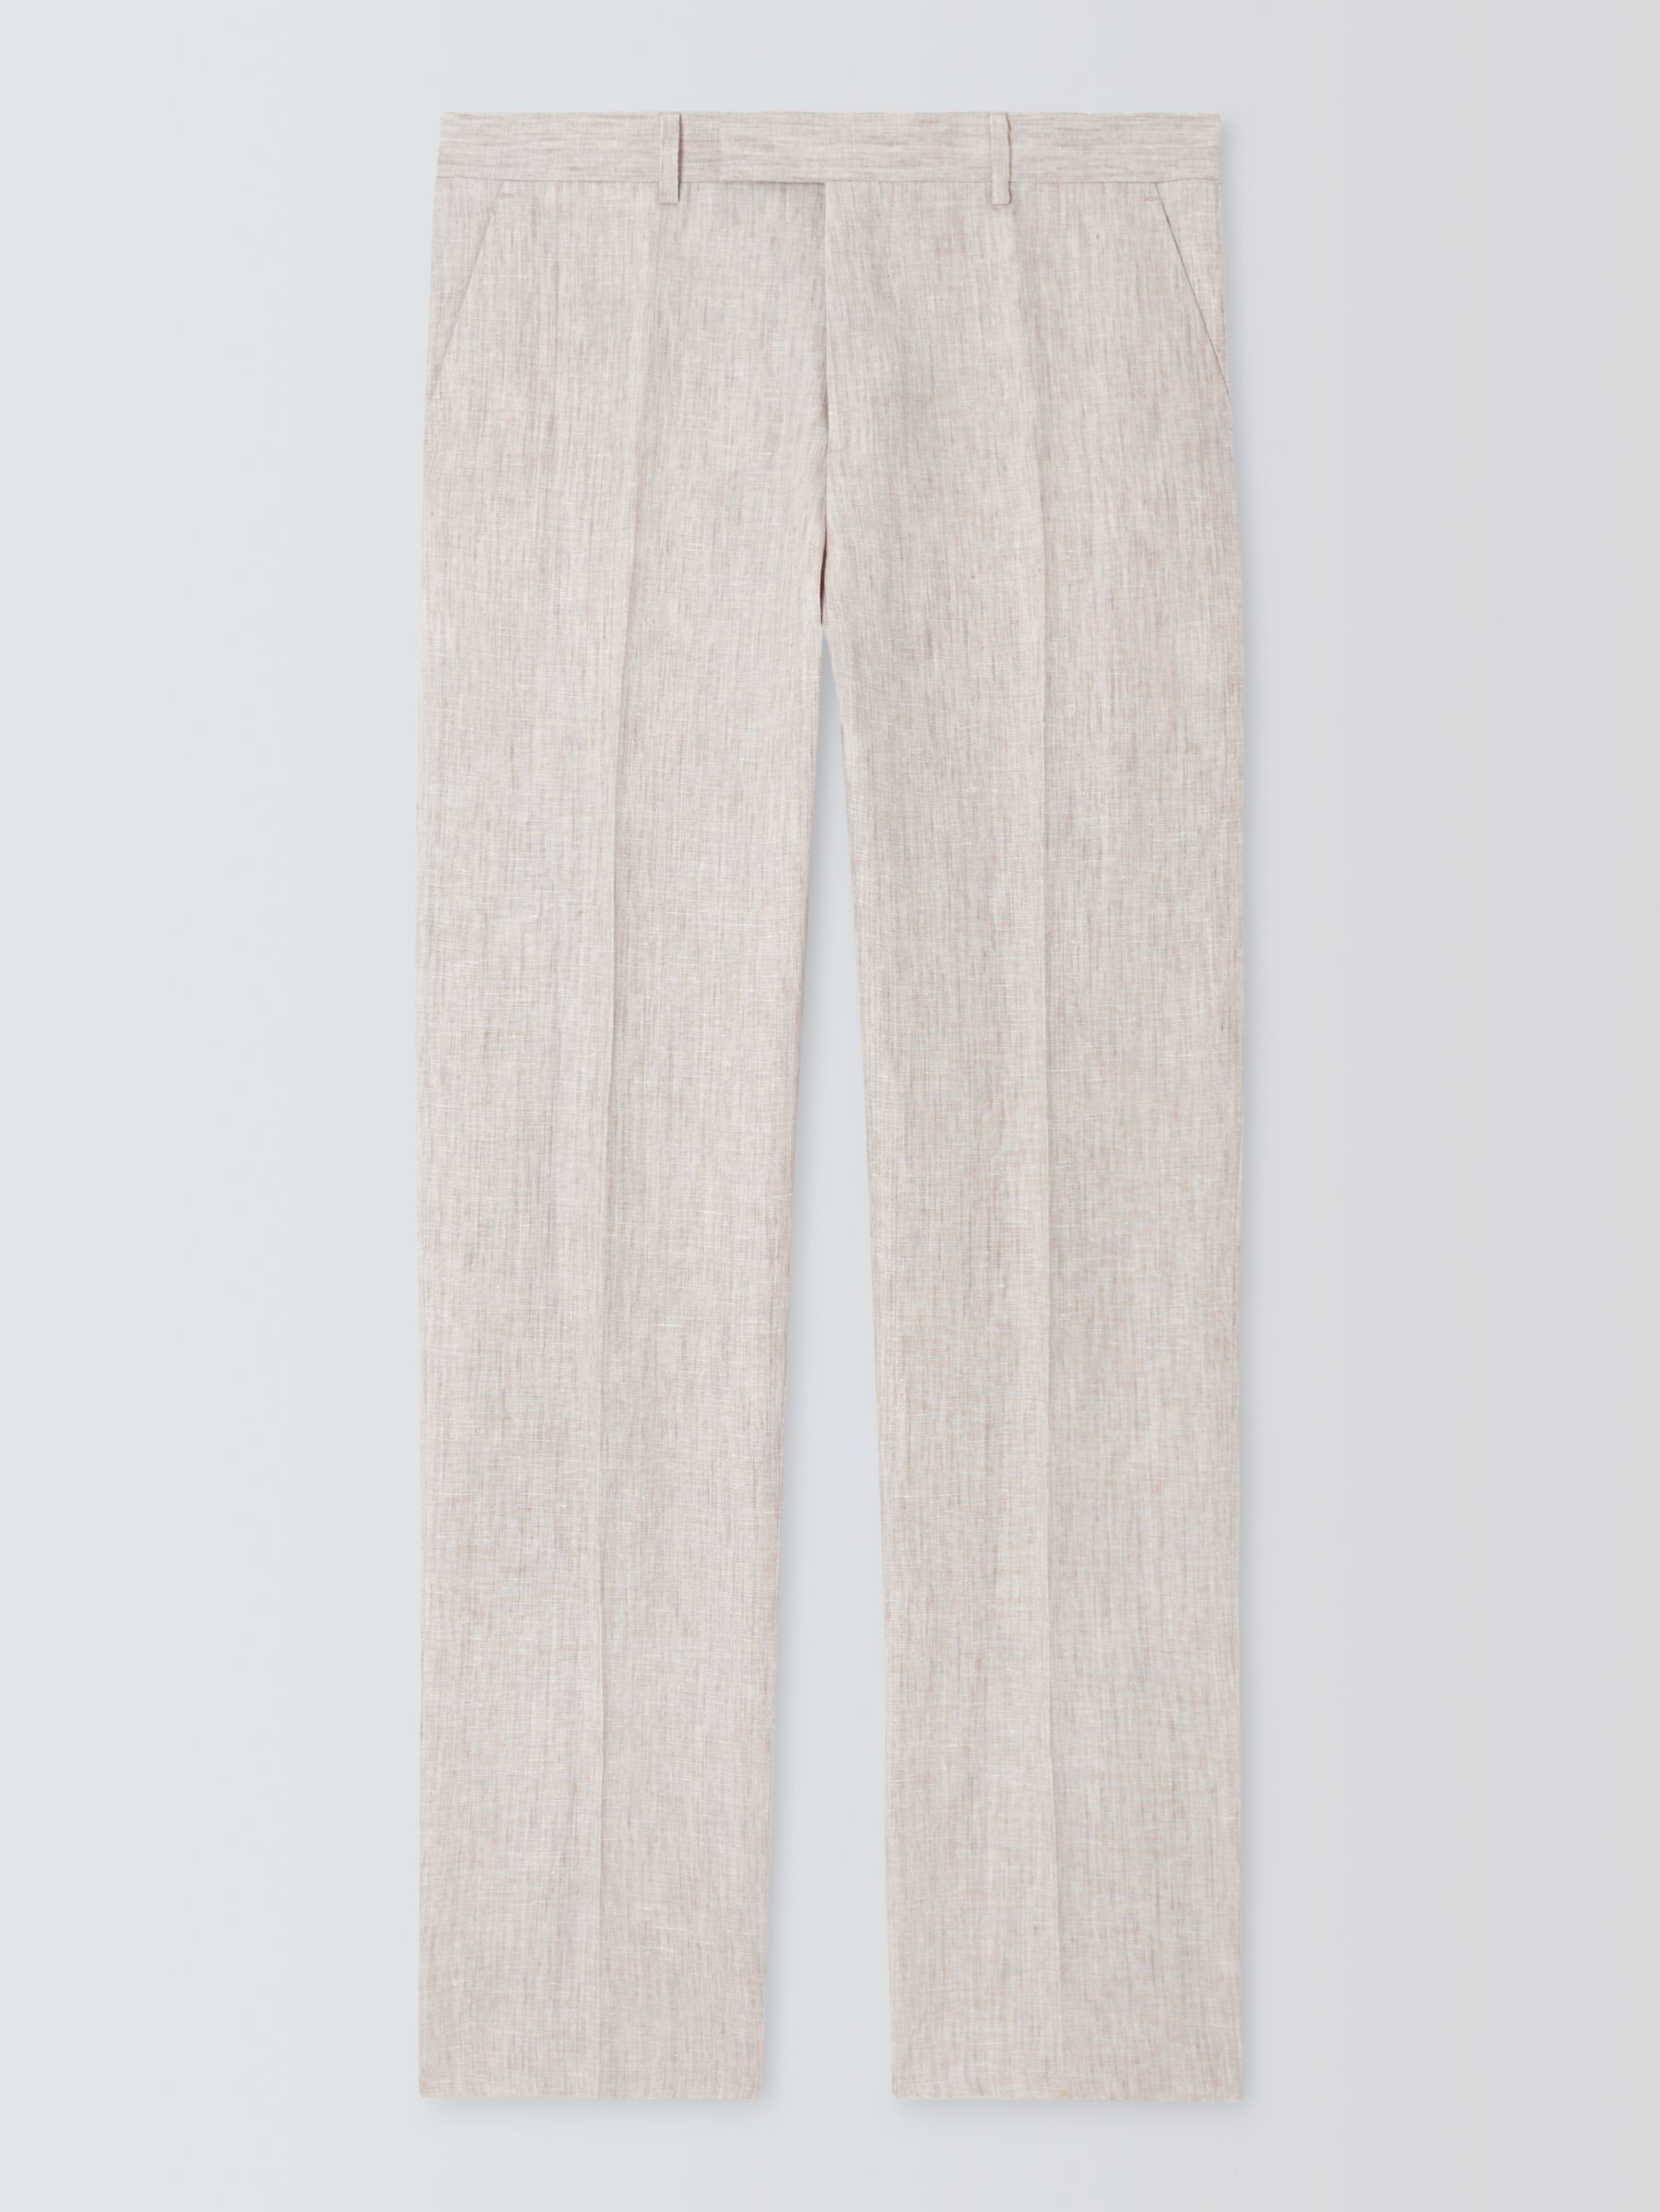 John Lewis Cambridge Linen Regular Fit Trousers, Stone, 30R